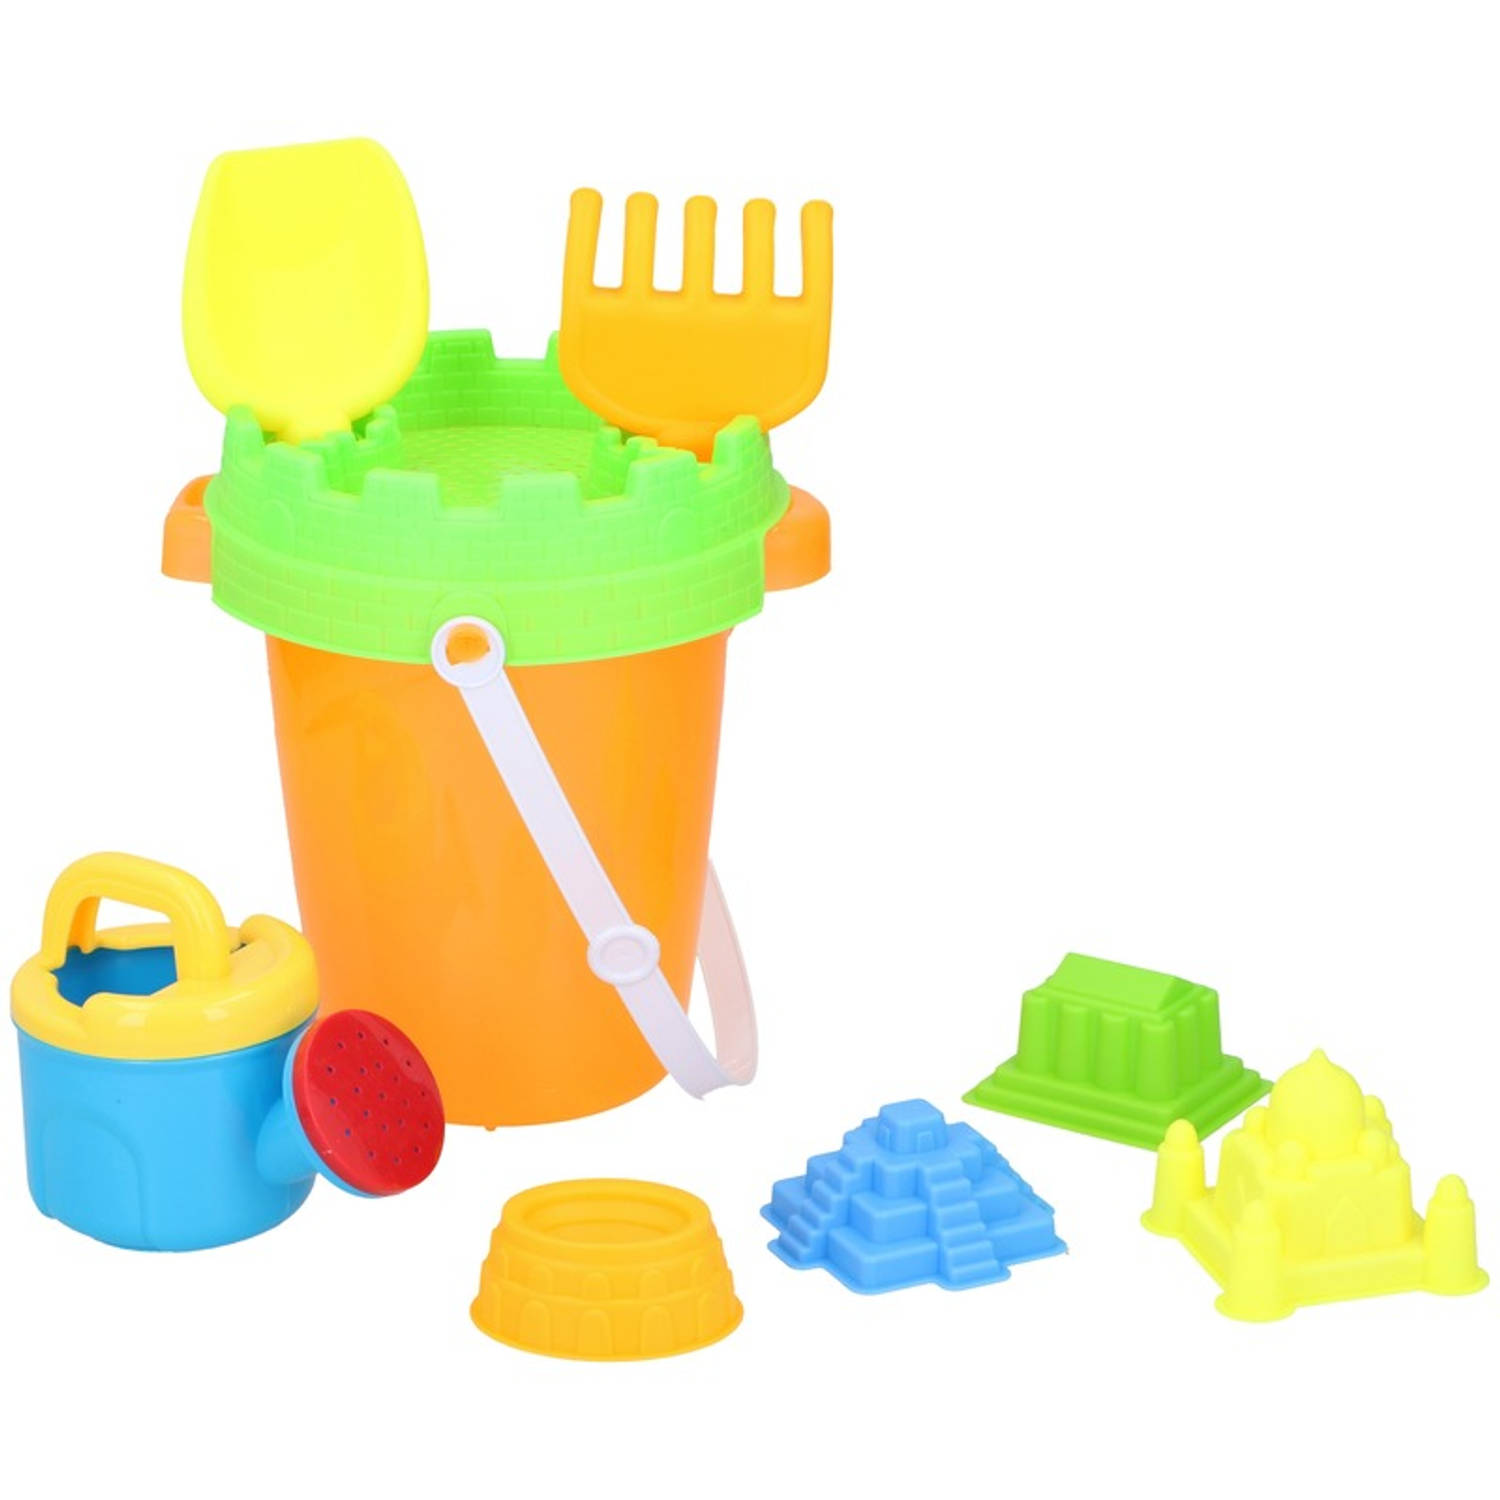 gekruld Kijkgat rand Strand/zandbak speelgoed oranje emmer met vormpjes en schepjes -  Zandspeelsets | Blokker